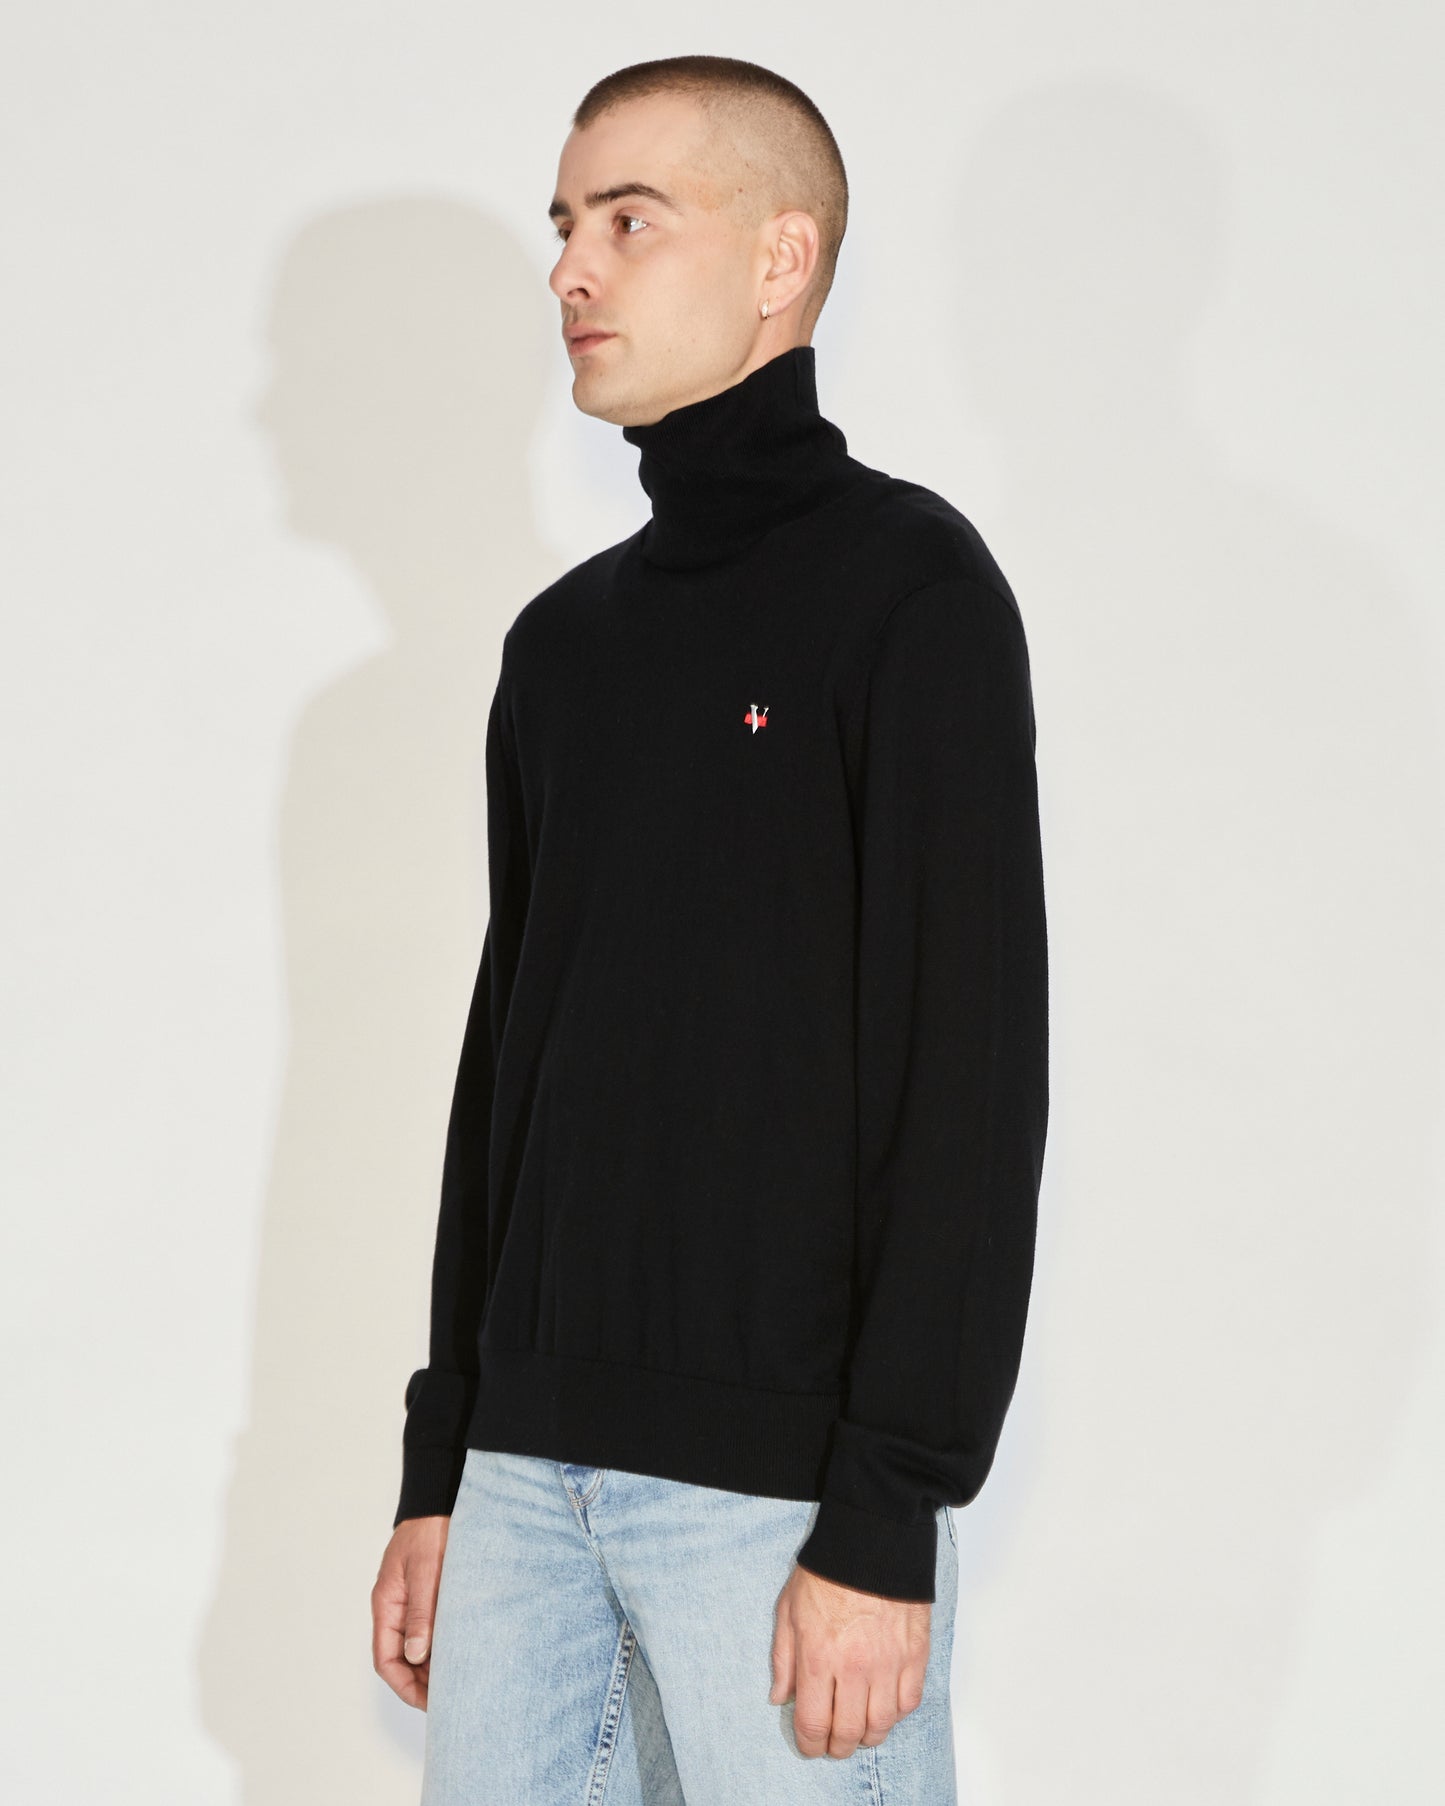 Turtleneck Sweater - Black